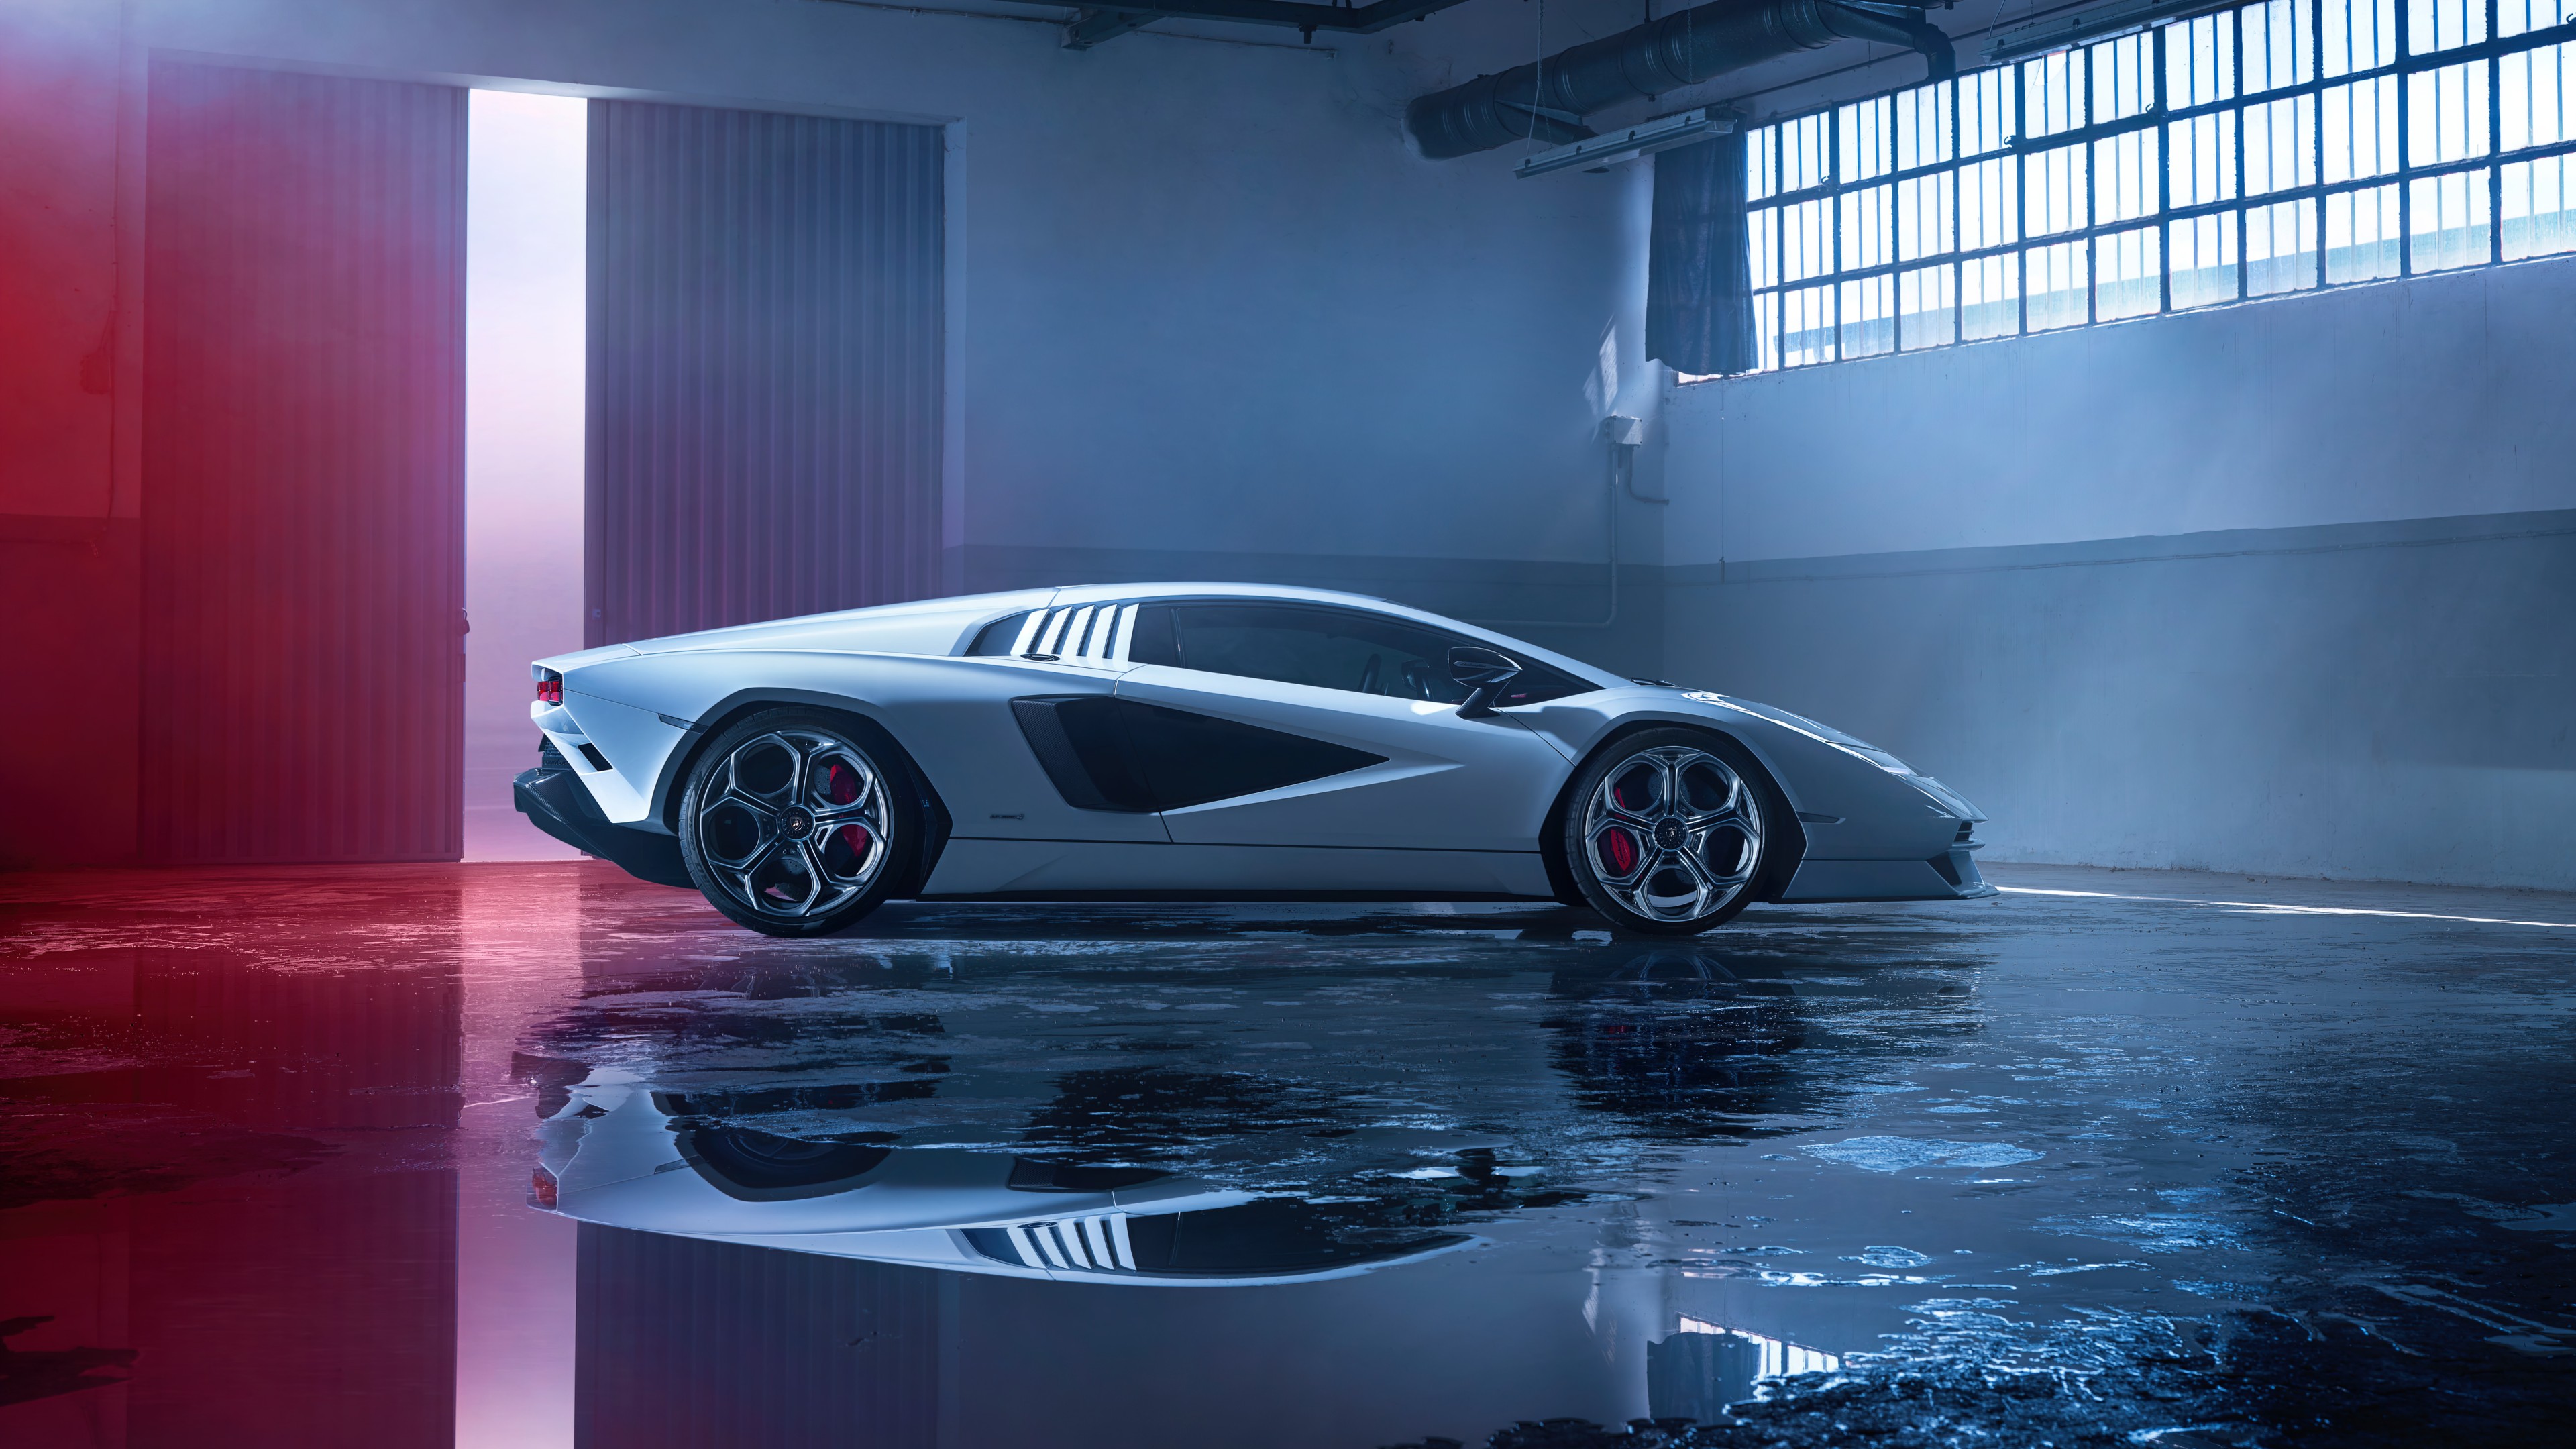 2022 Lamborghini Countach LPI 800-4 5K 3 Wallpaper | HD Car Wallpapers